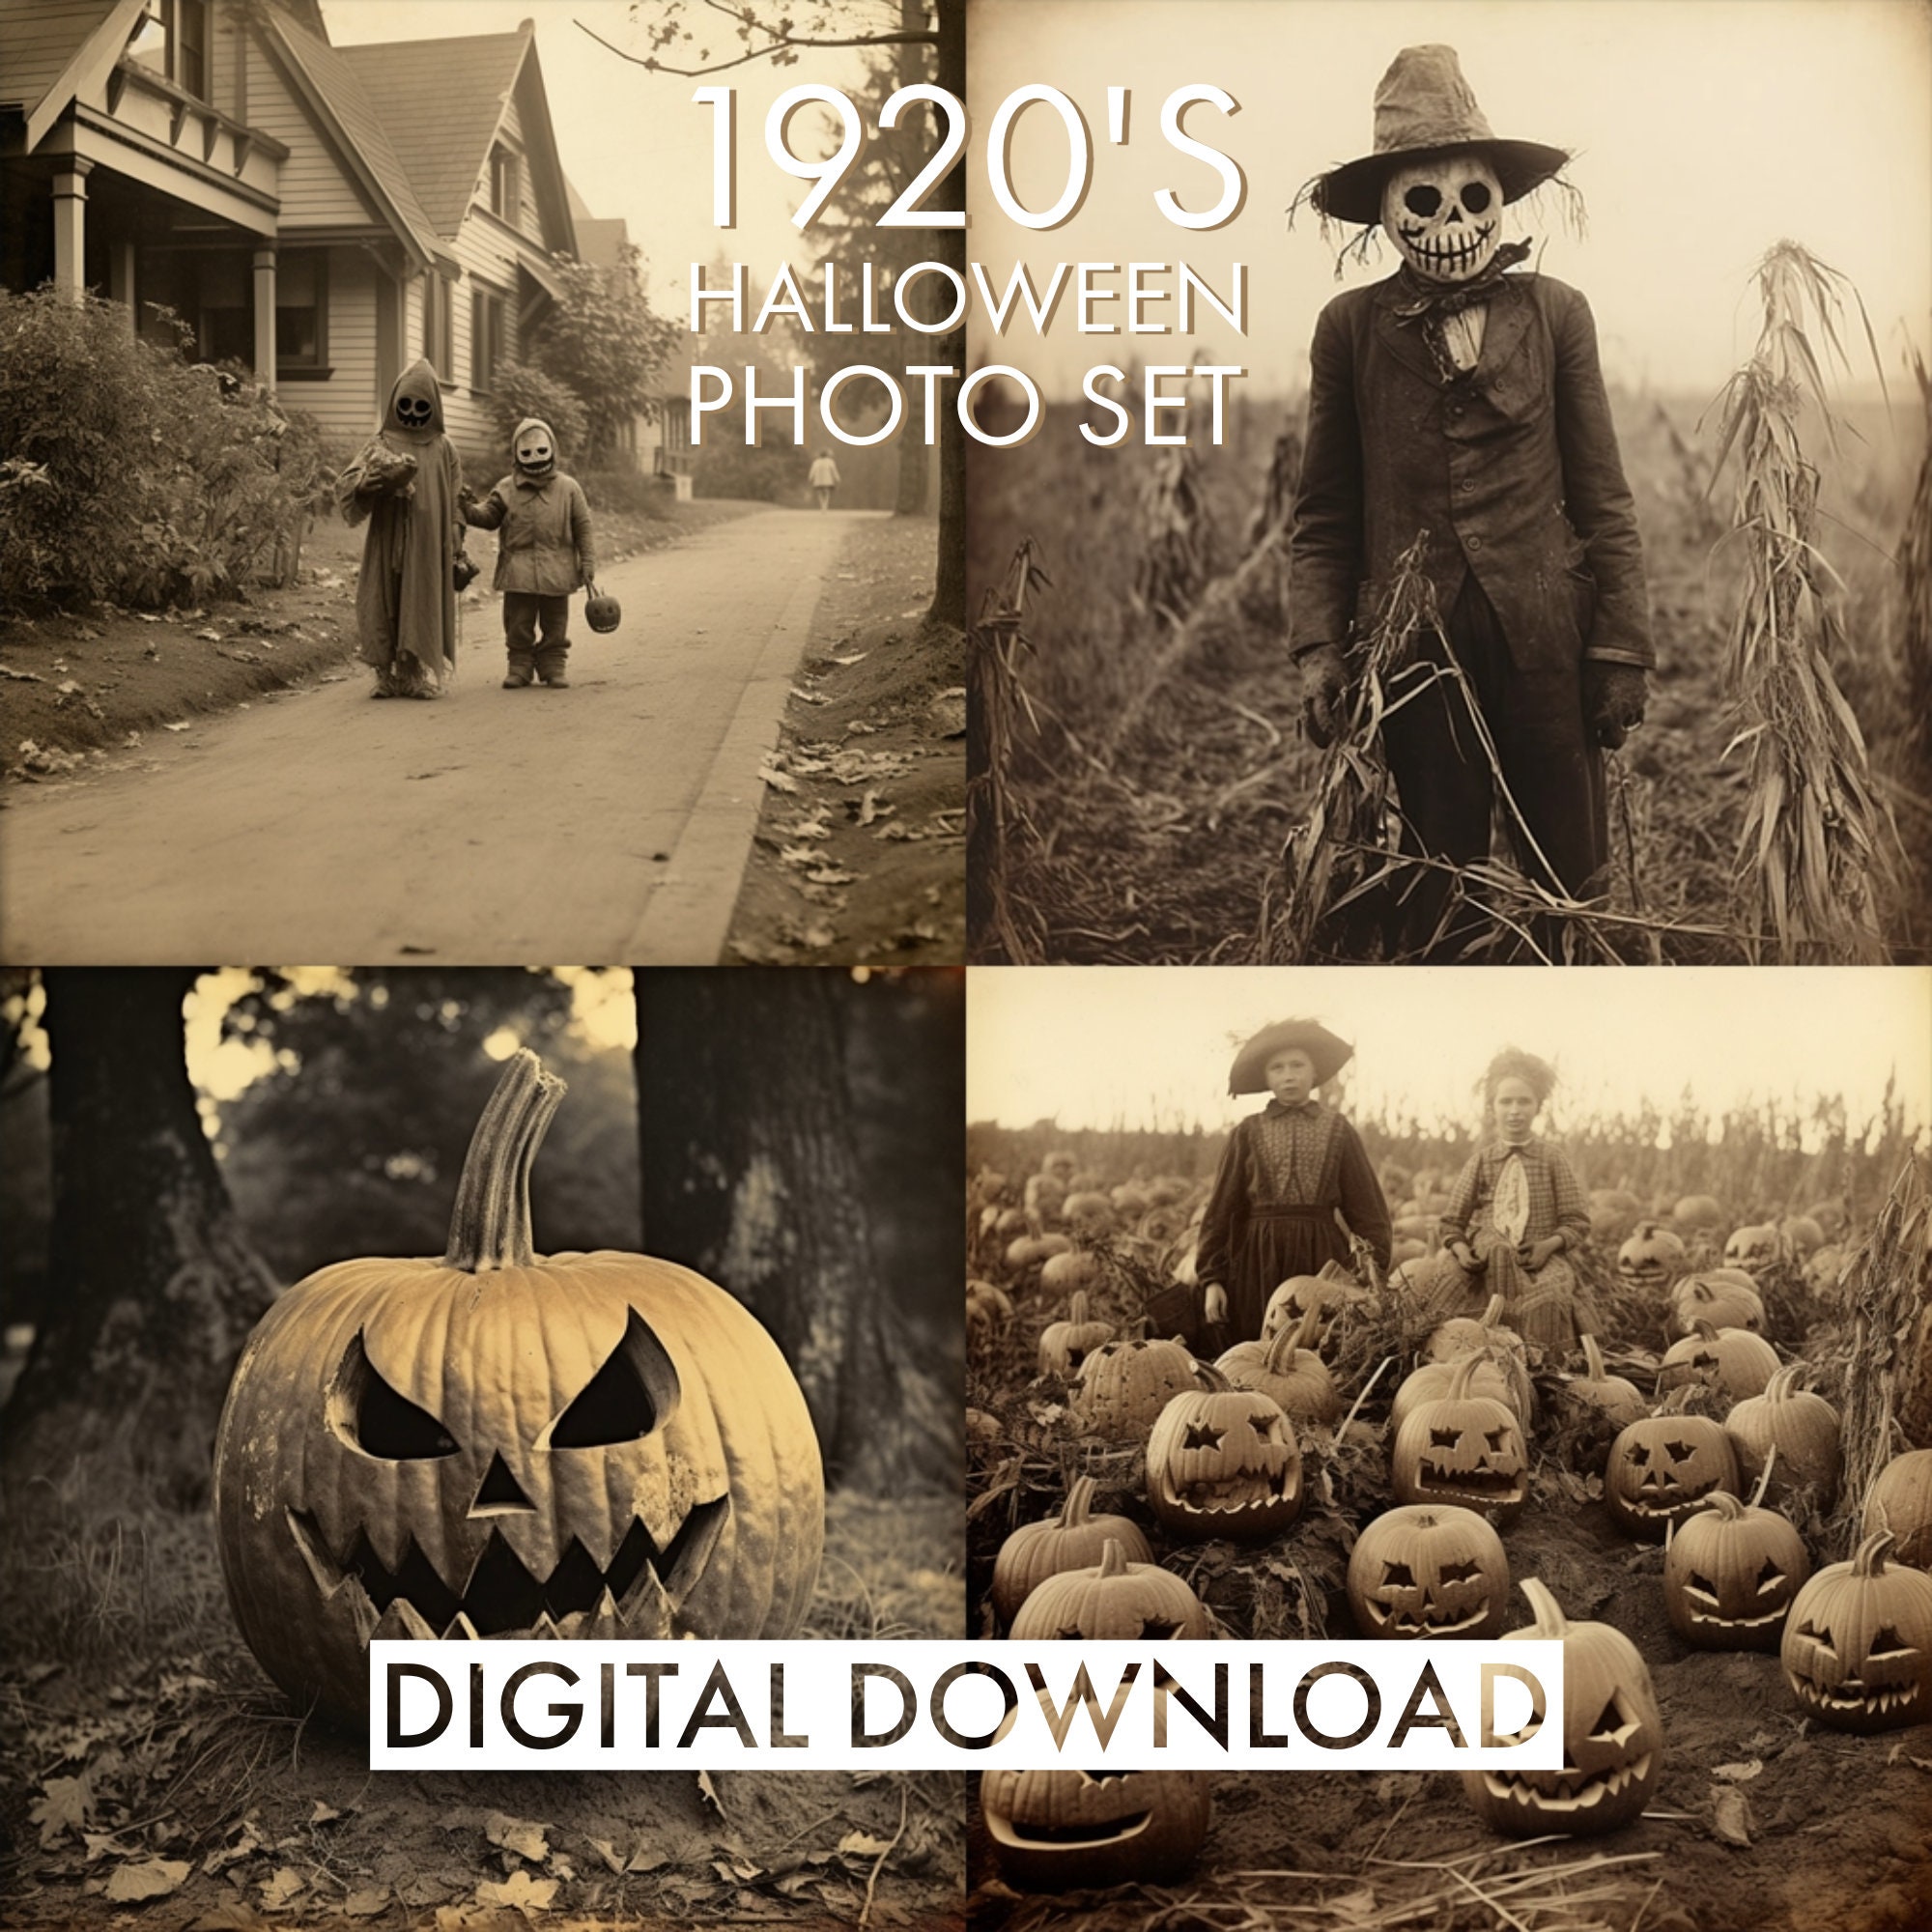 File:Halloween-2870607 1920.jpg - Wikimedia Commons